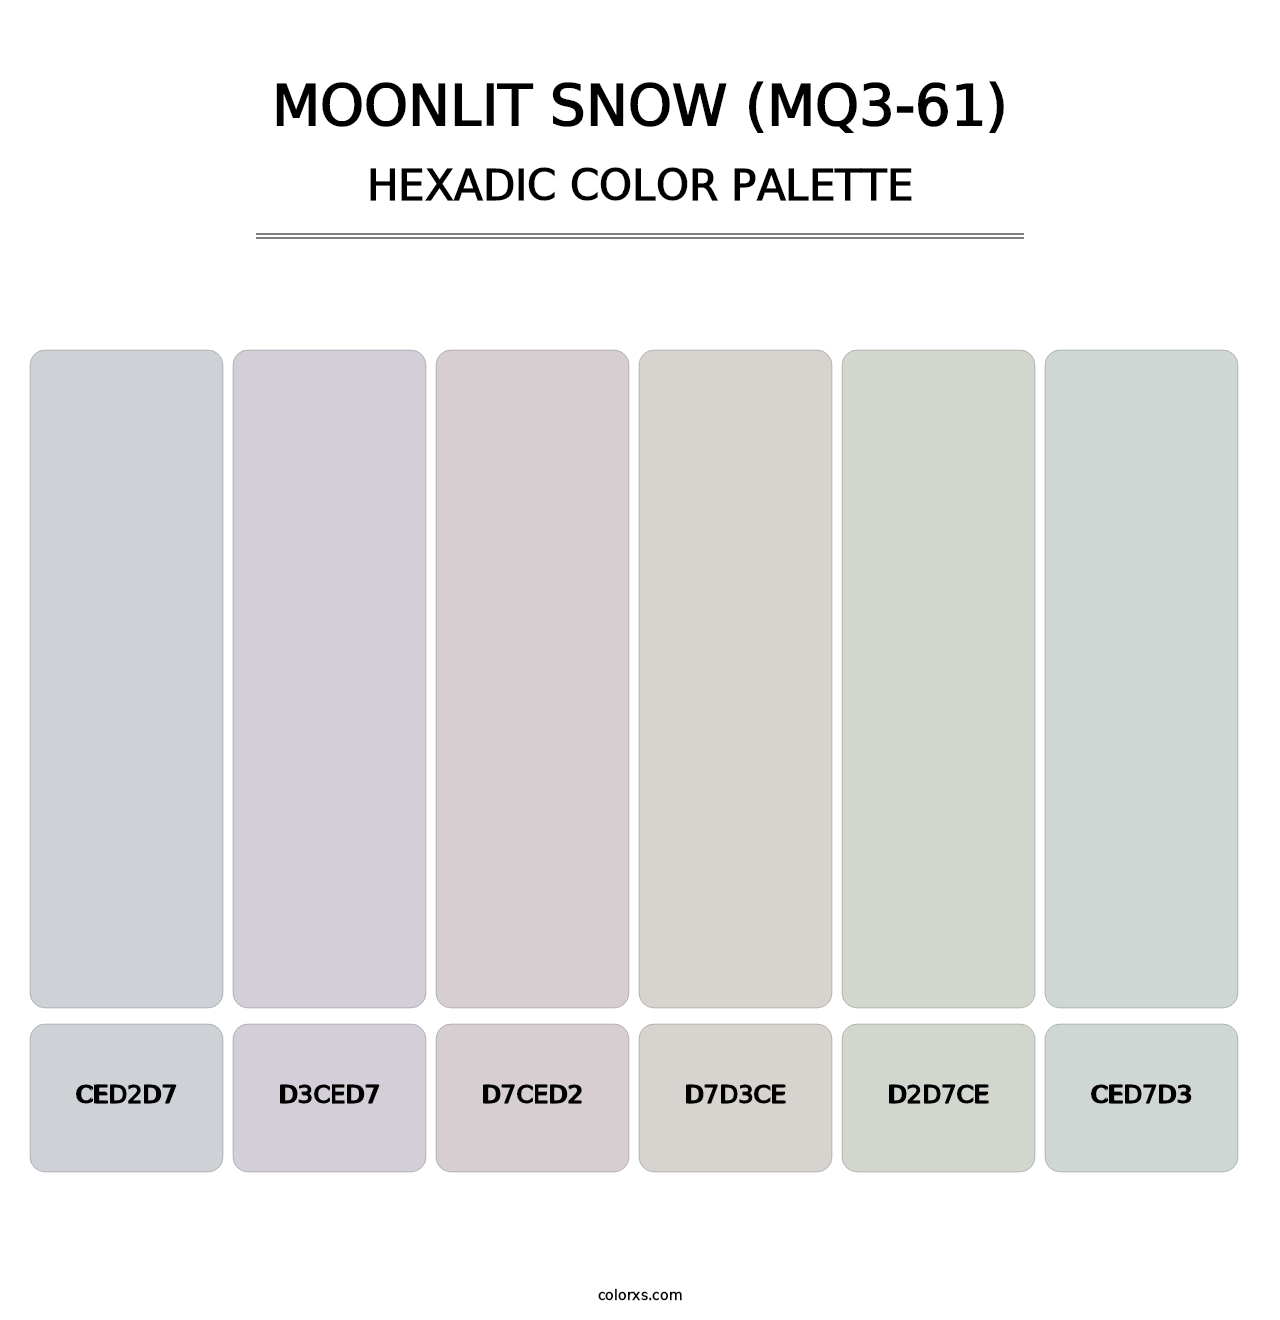 Moonlit Snow (MQ3-61) - Hexadic Color Palette